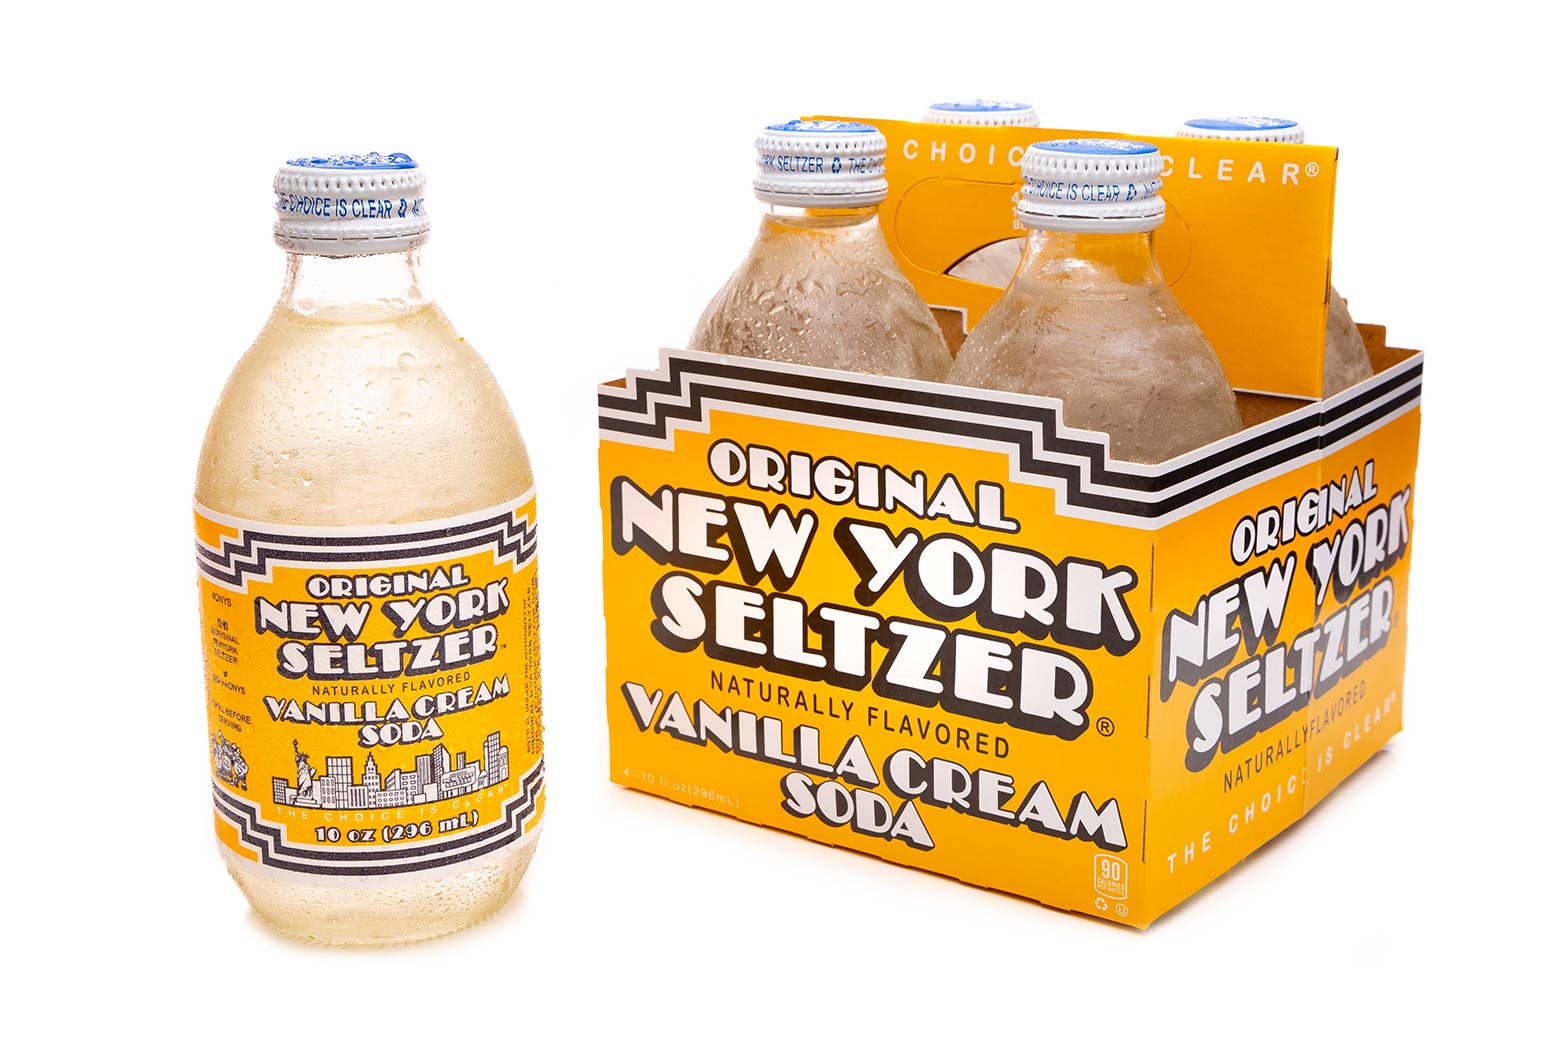 Original New York Seltzer Vanilla Cream 4-pack carrier with bottle